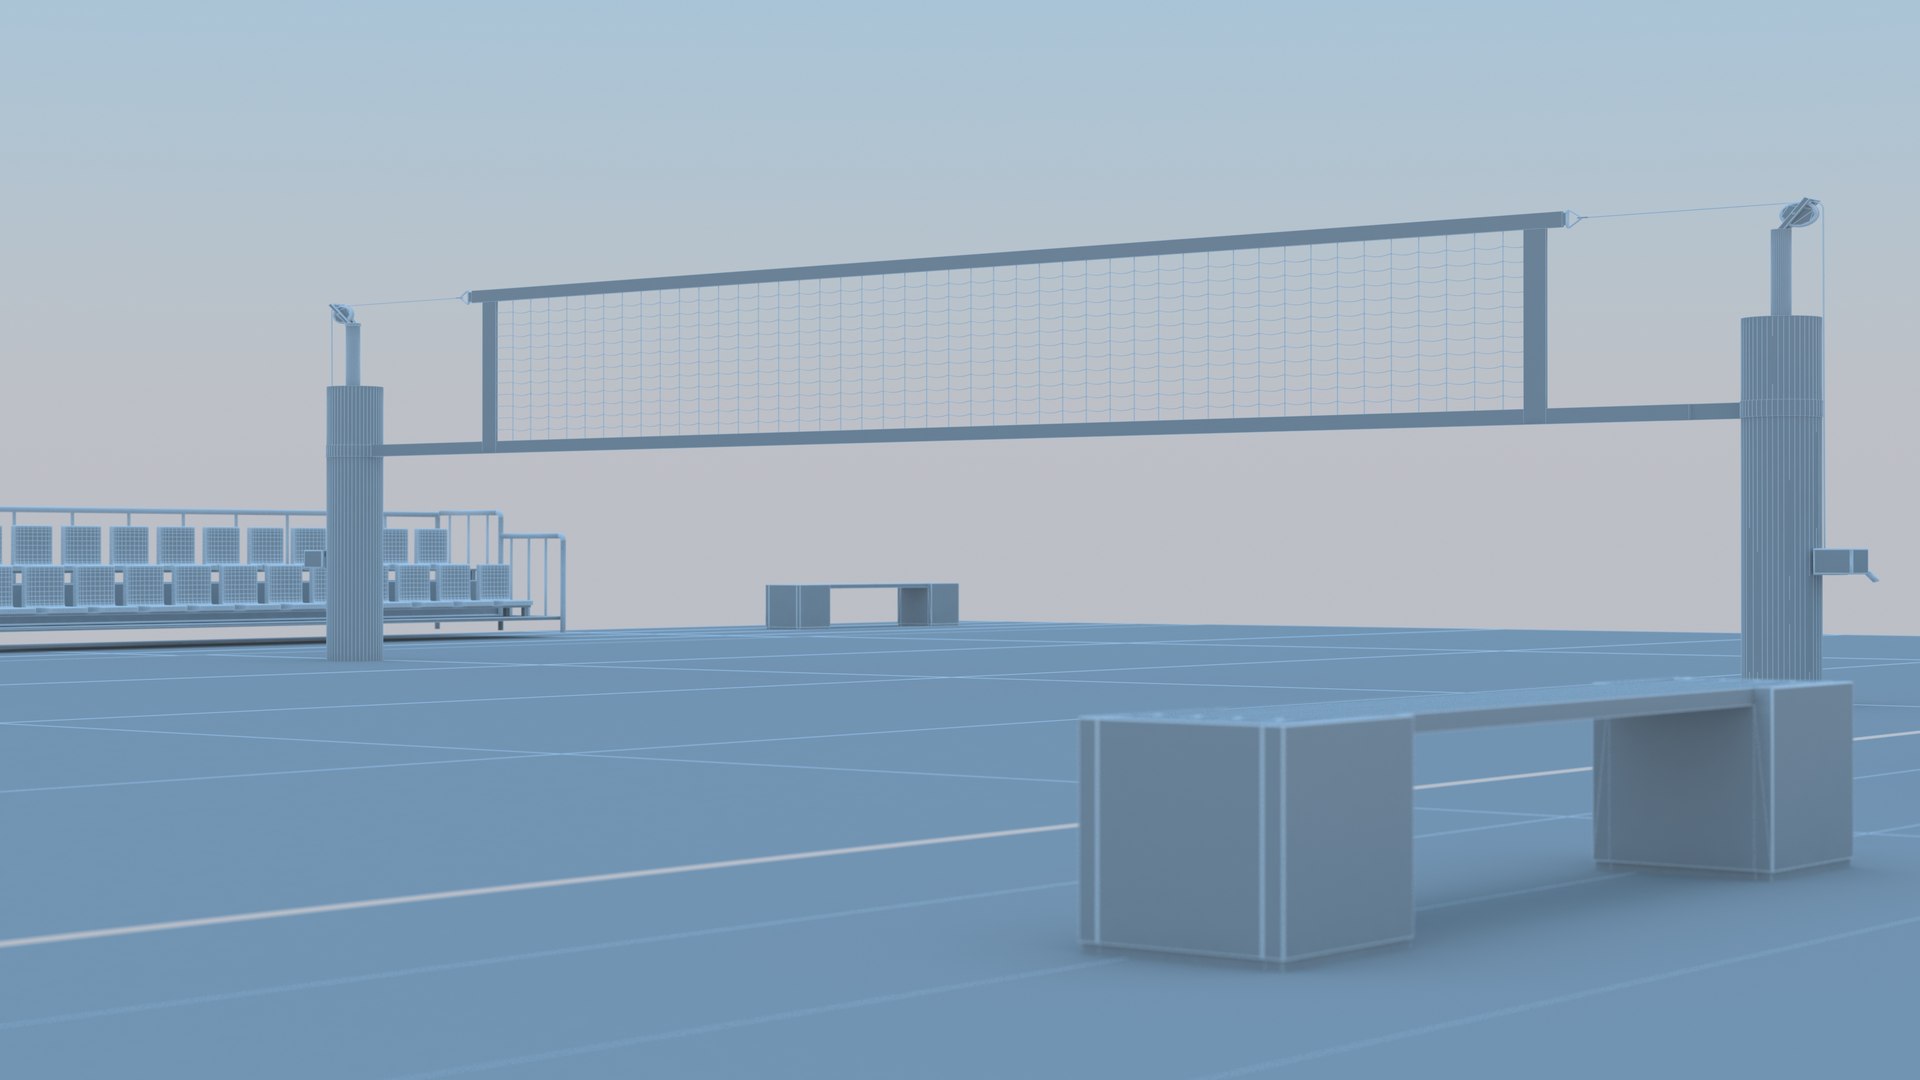 3D Volleyball Court Model - TurboSquid 1880665